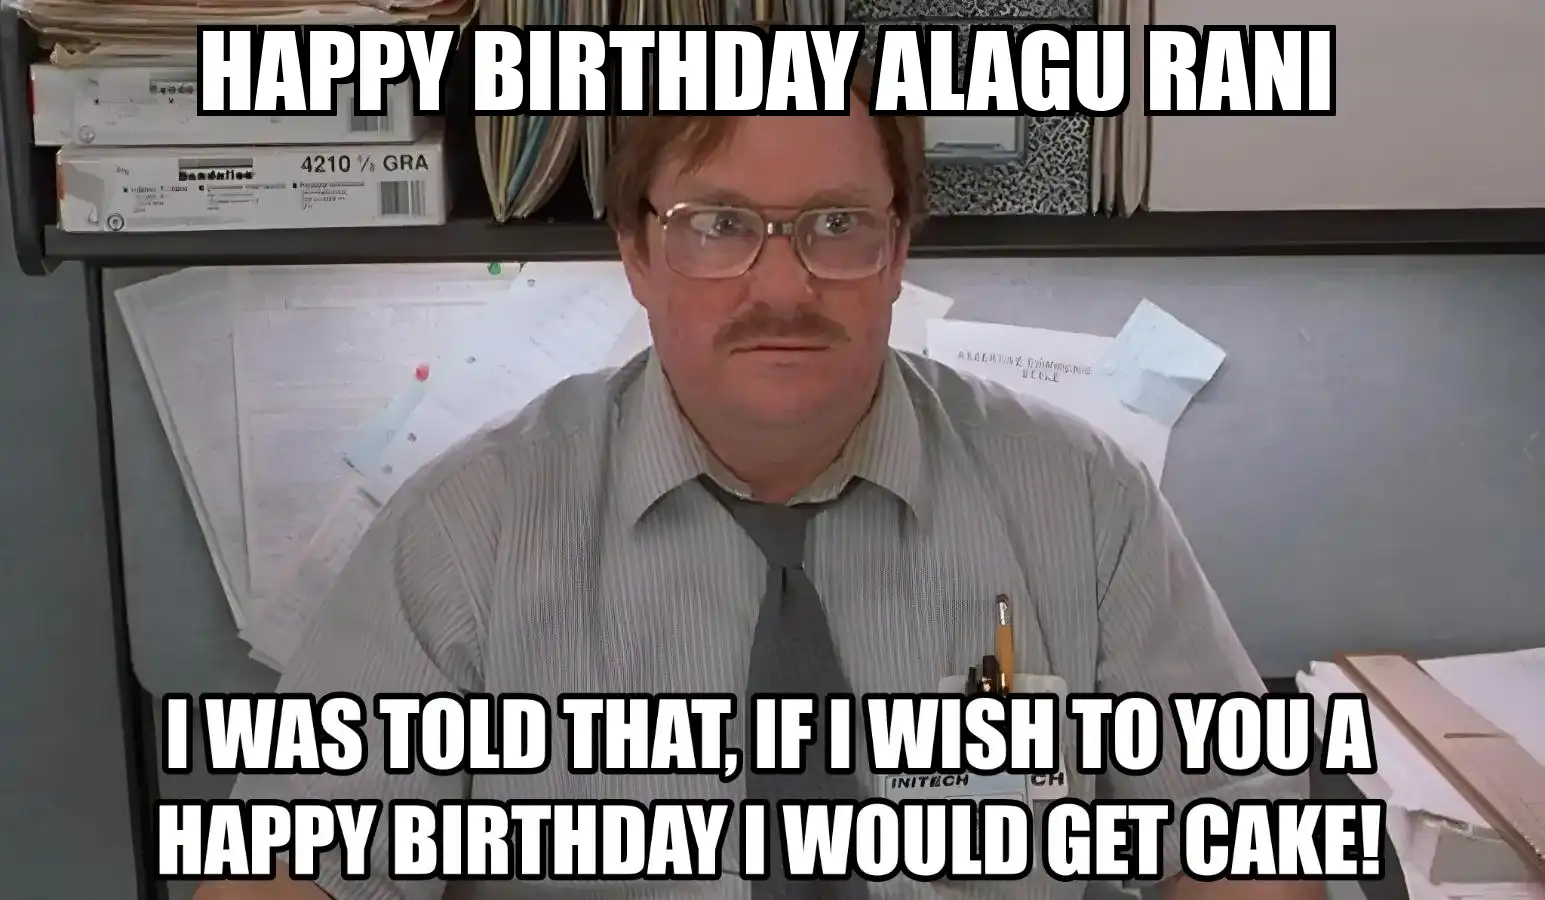 Happy Birthday Alagu rani I Would Get A Cake Meme